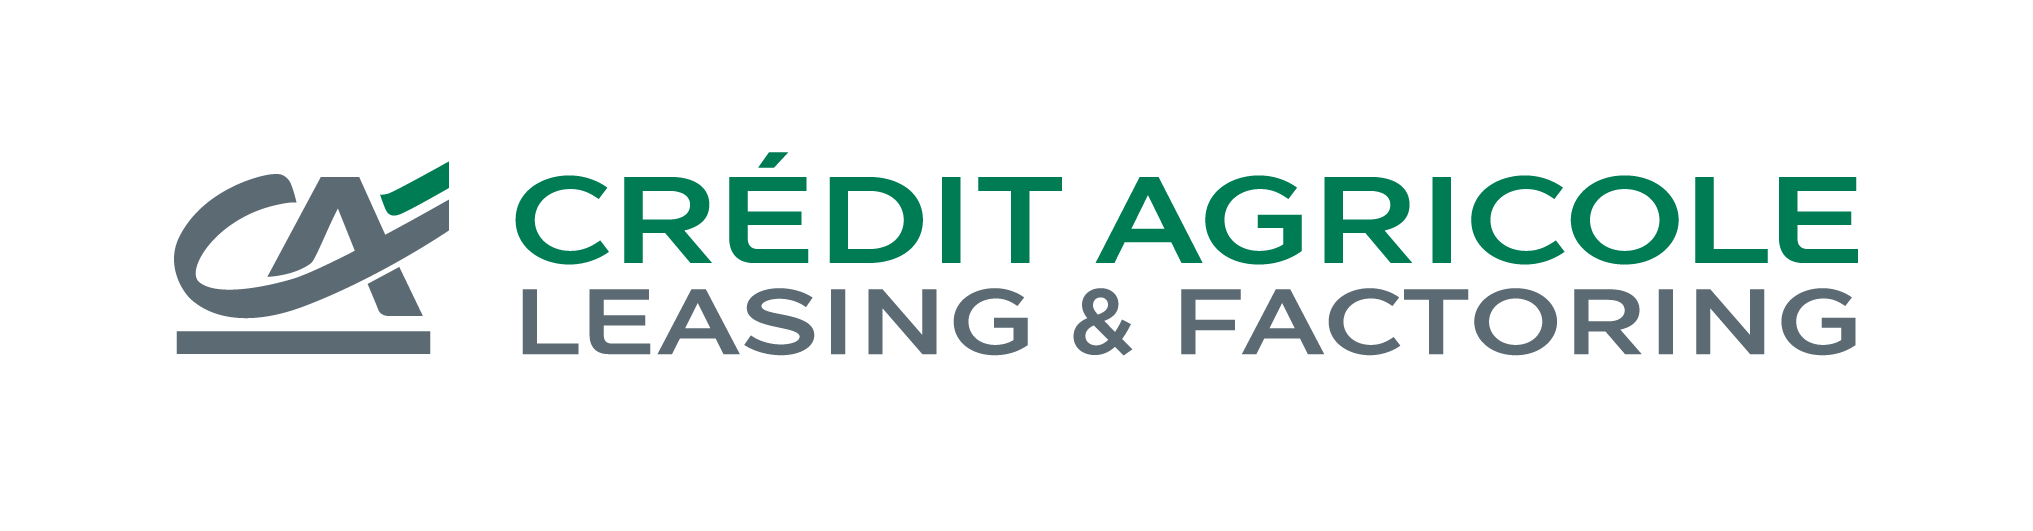 Crdit Agricole Leasing Factoring CALF logo